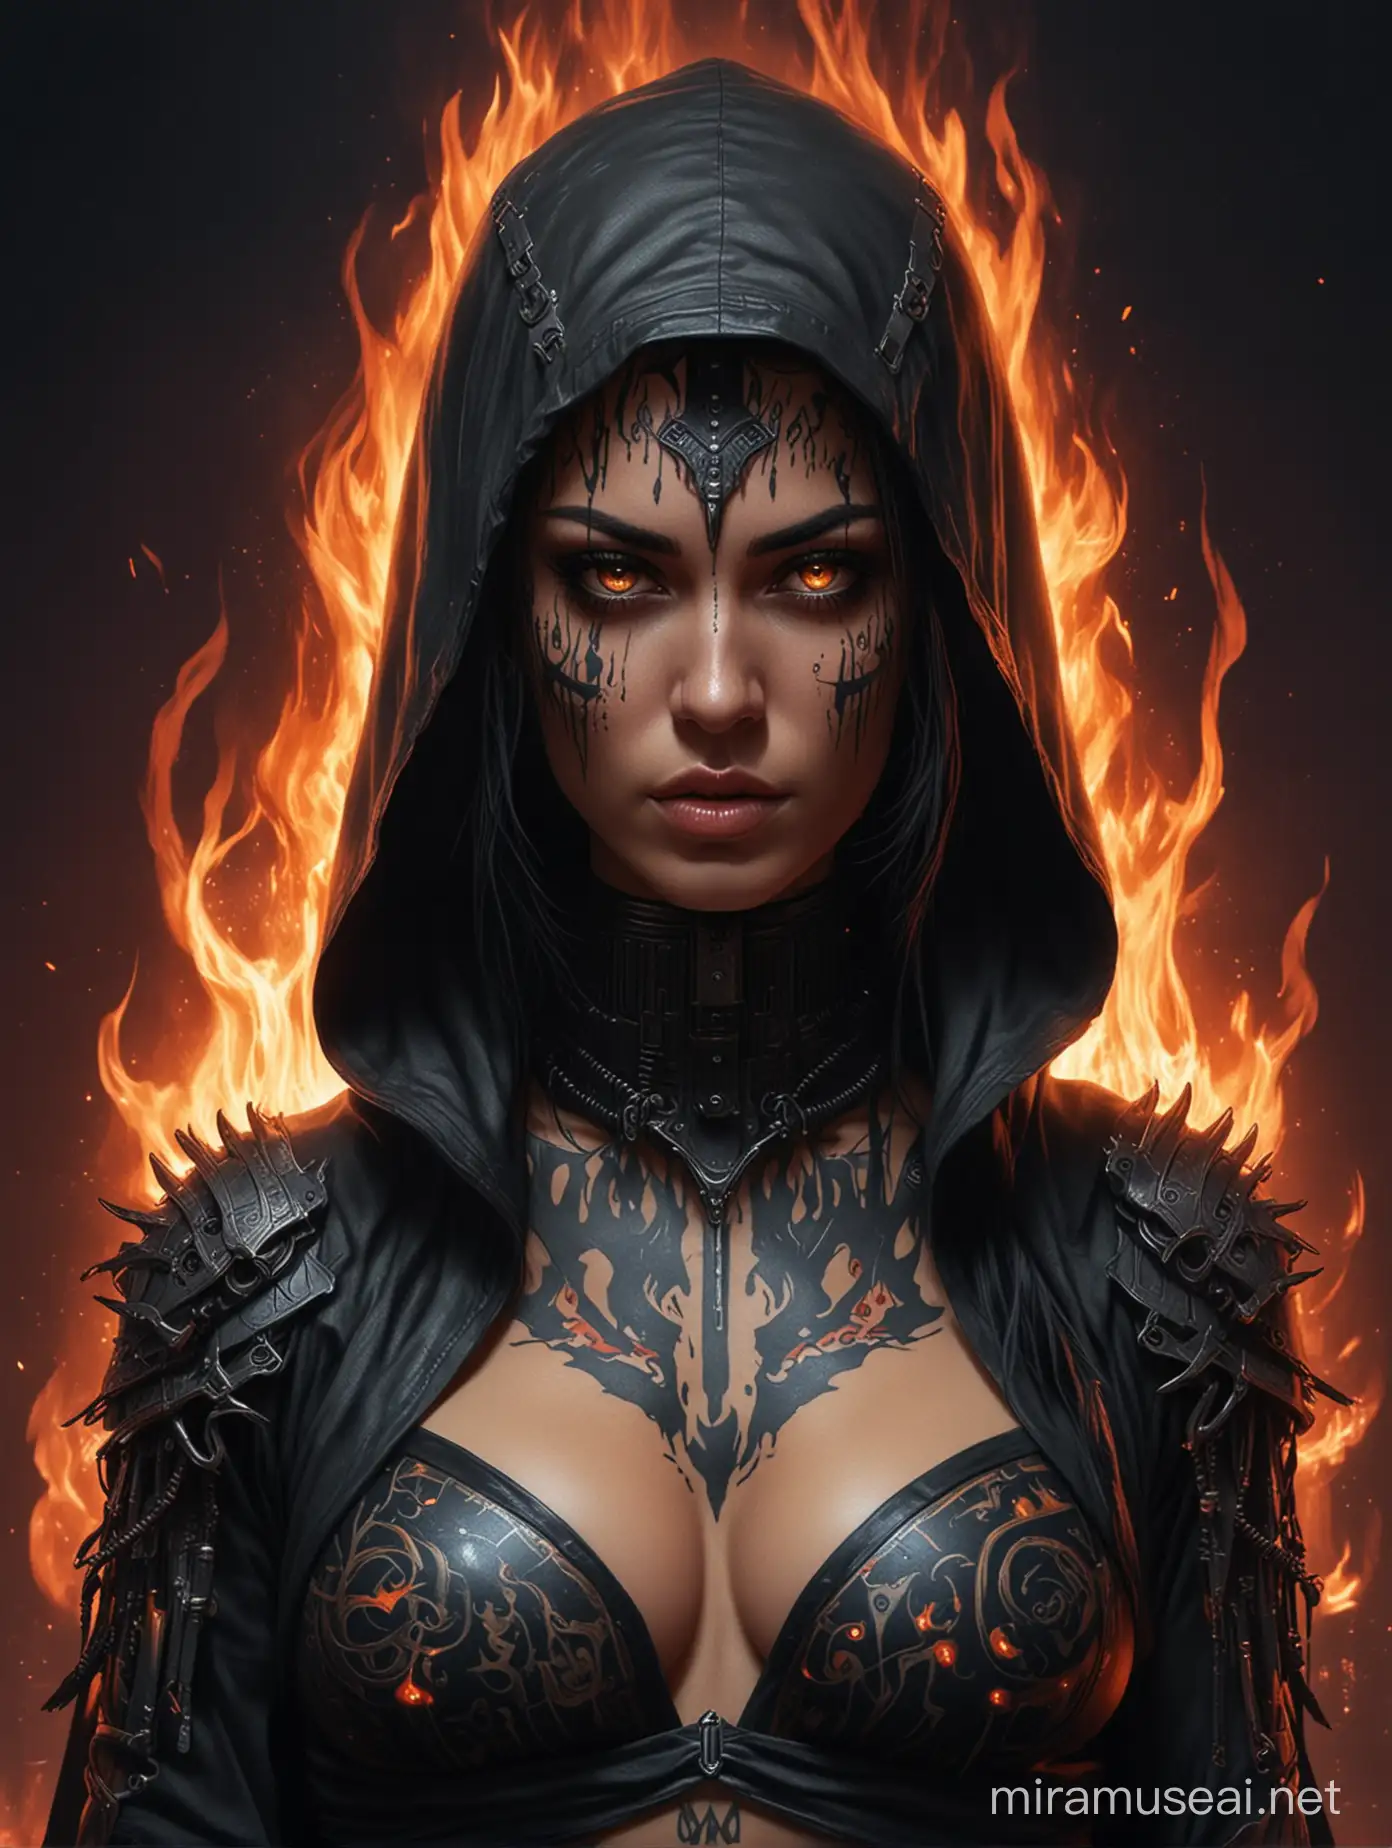 Cyberpunk Priestess with Fiery Tattoos